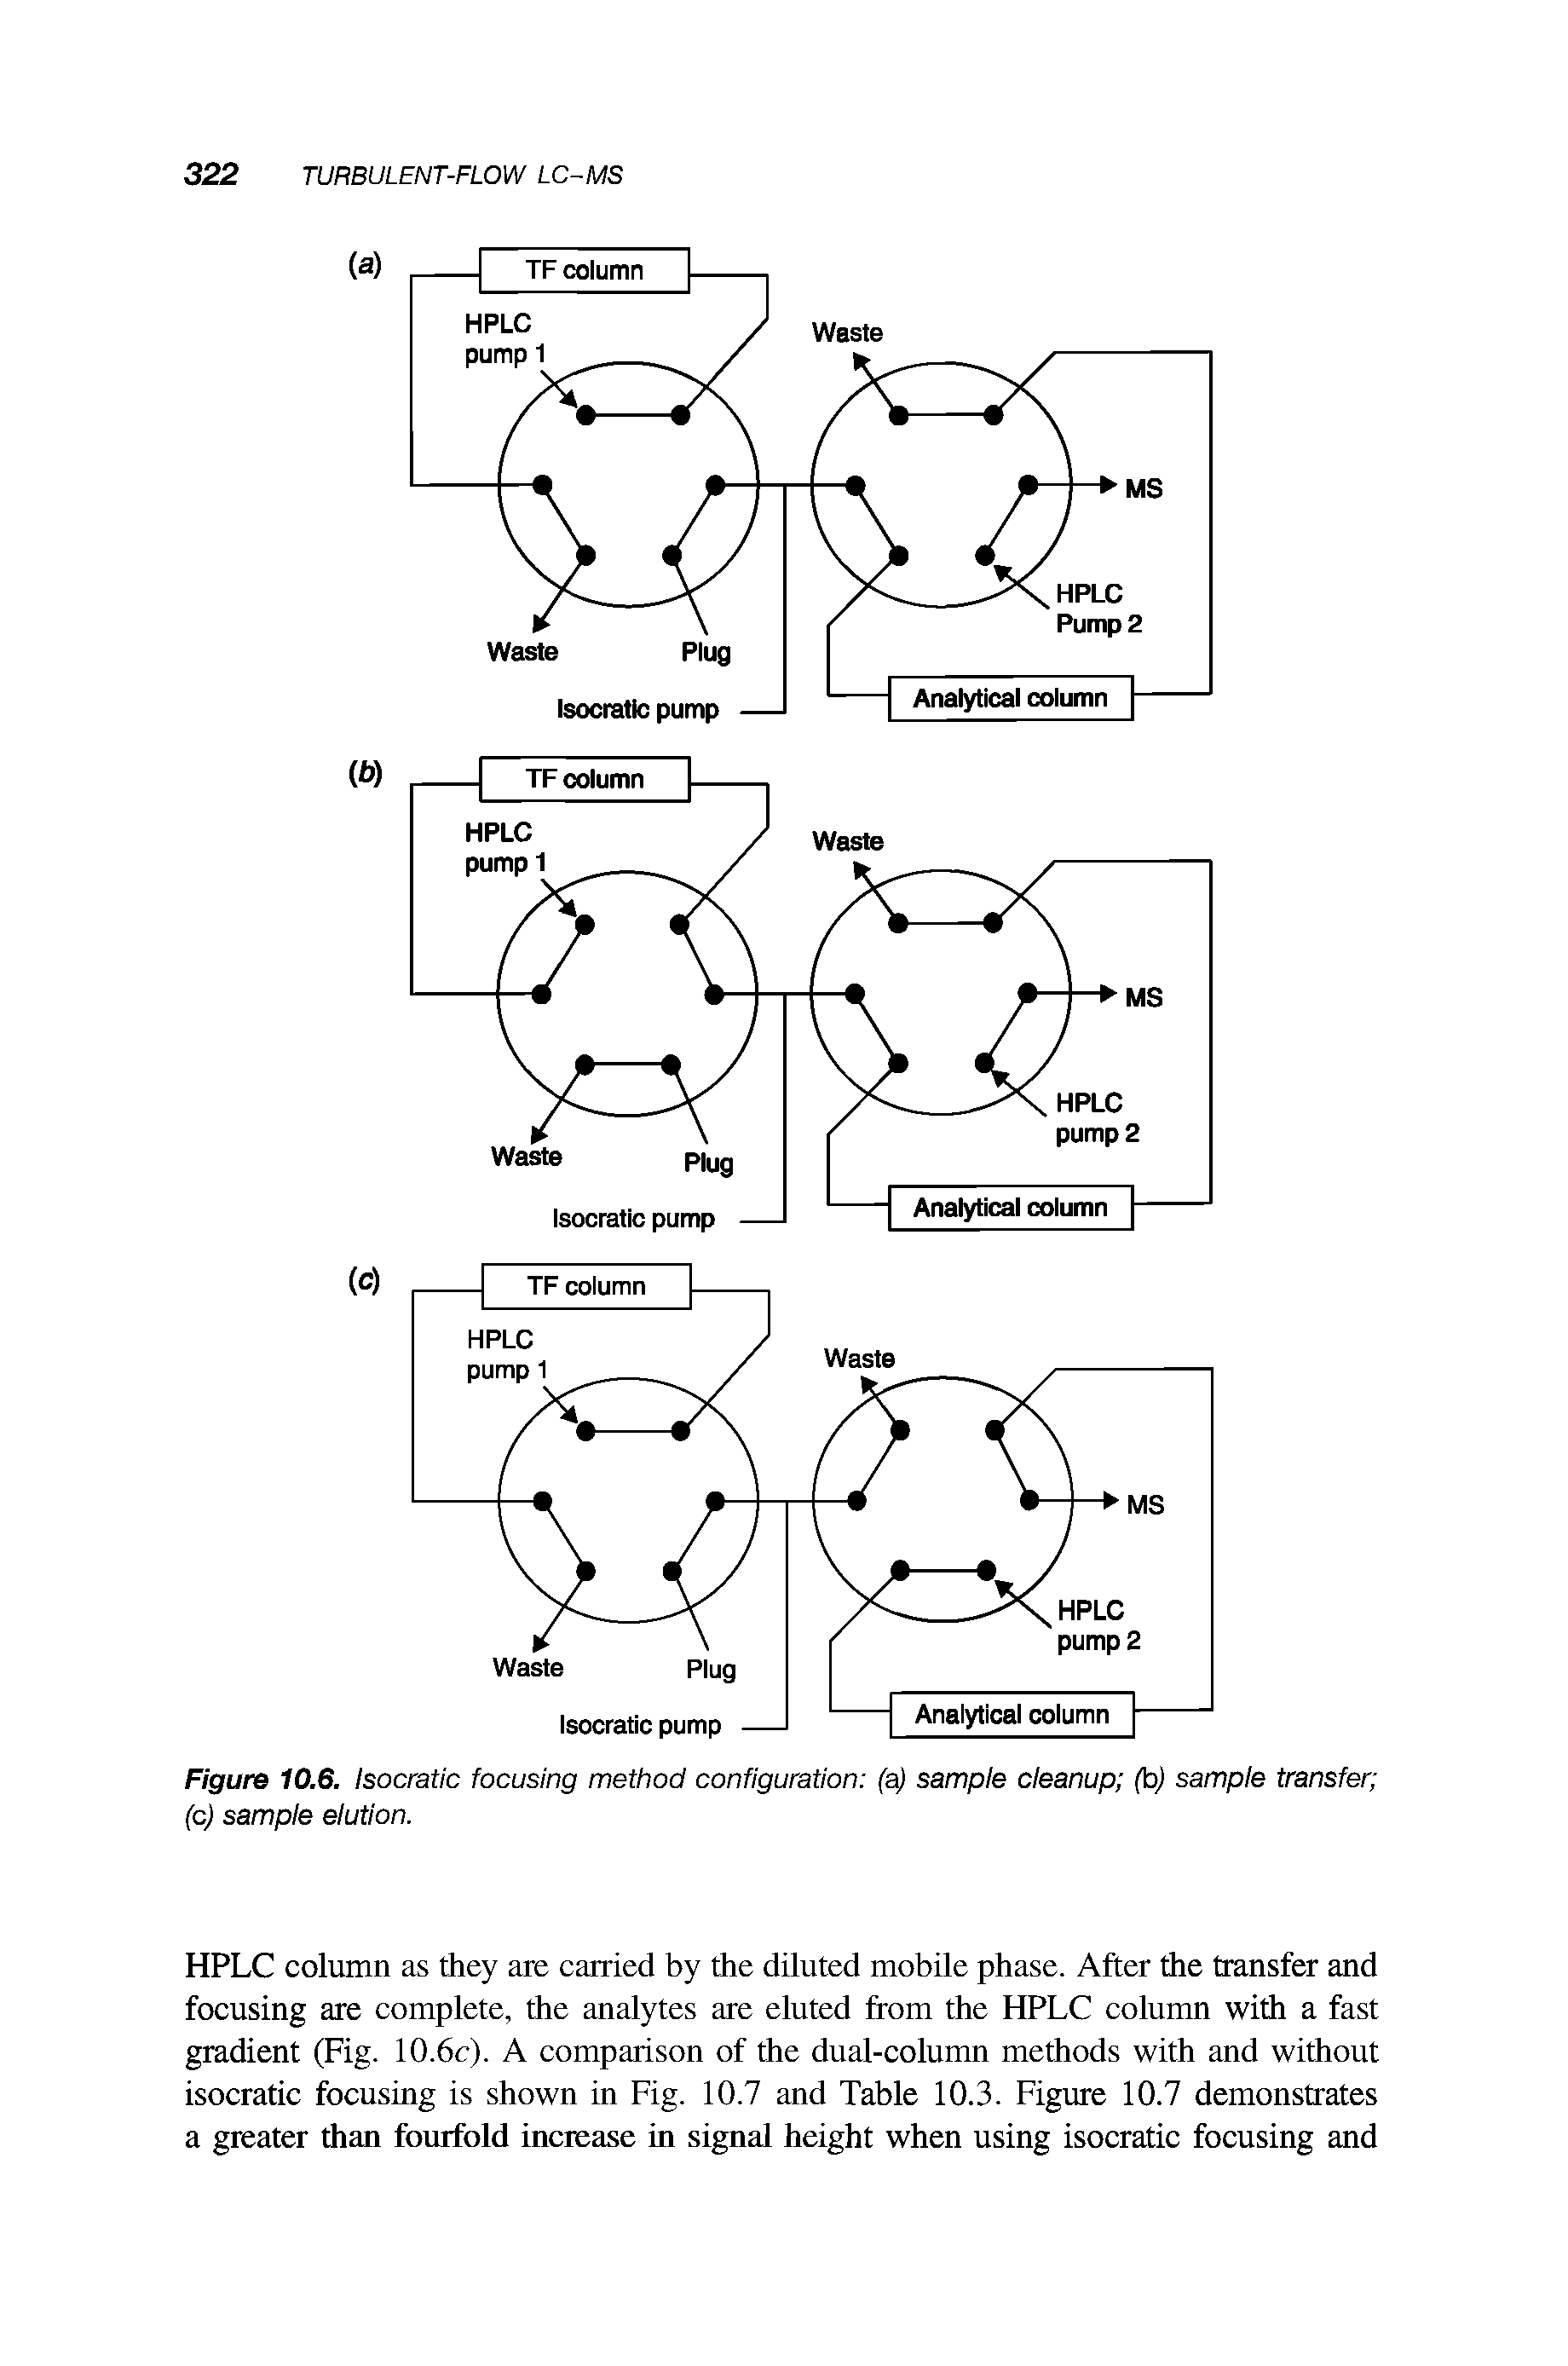 Figure 10.6. Isocratic focusing method configuration (a) sample cleanup (b) sample transfer (c) sample elution.